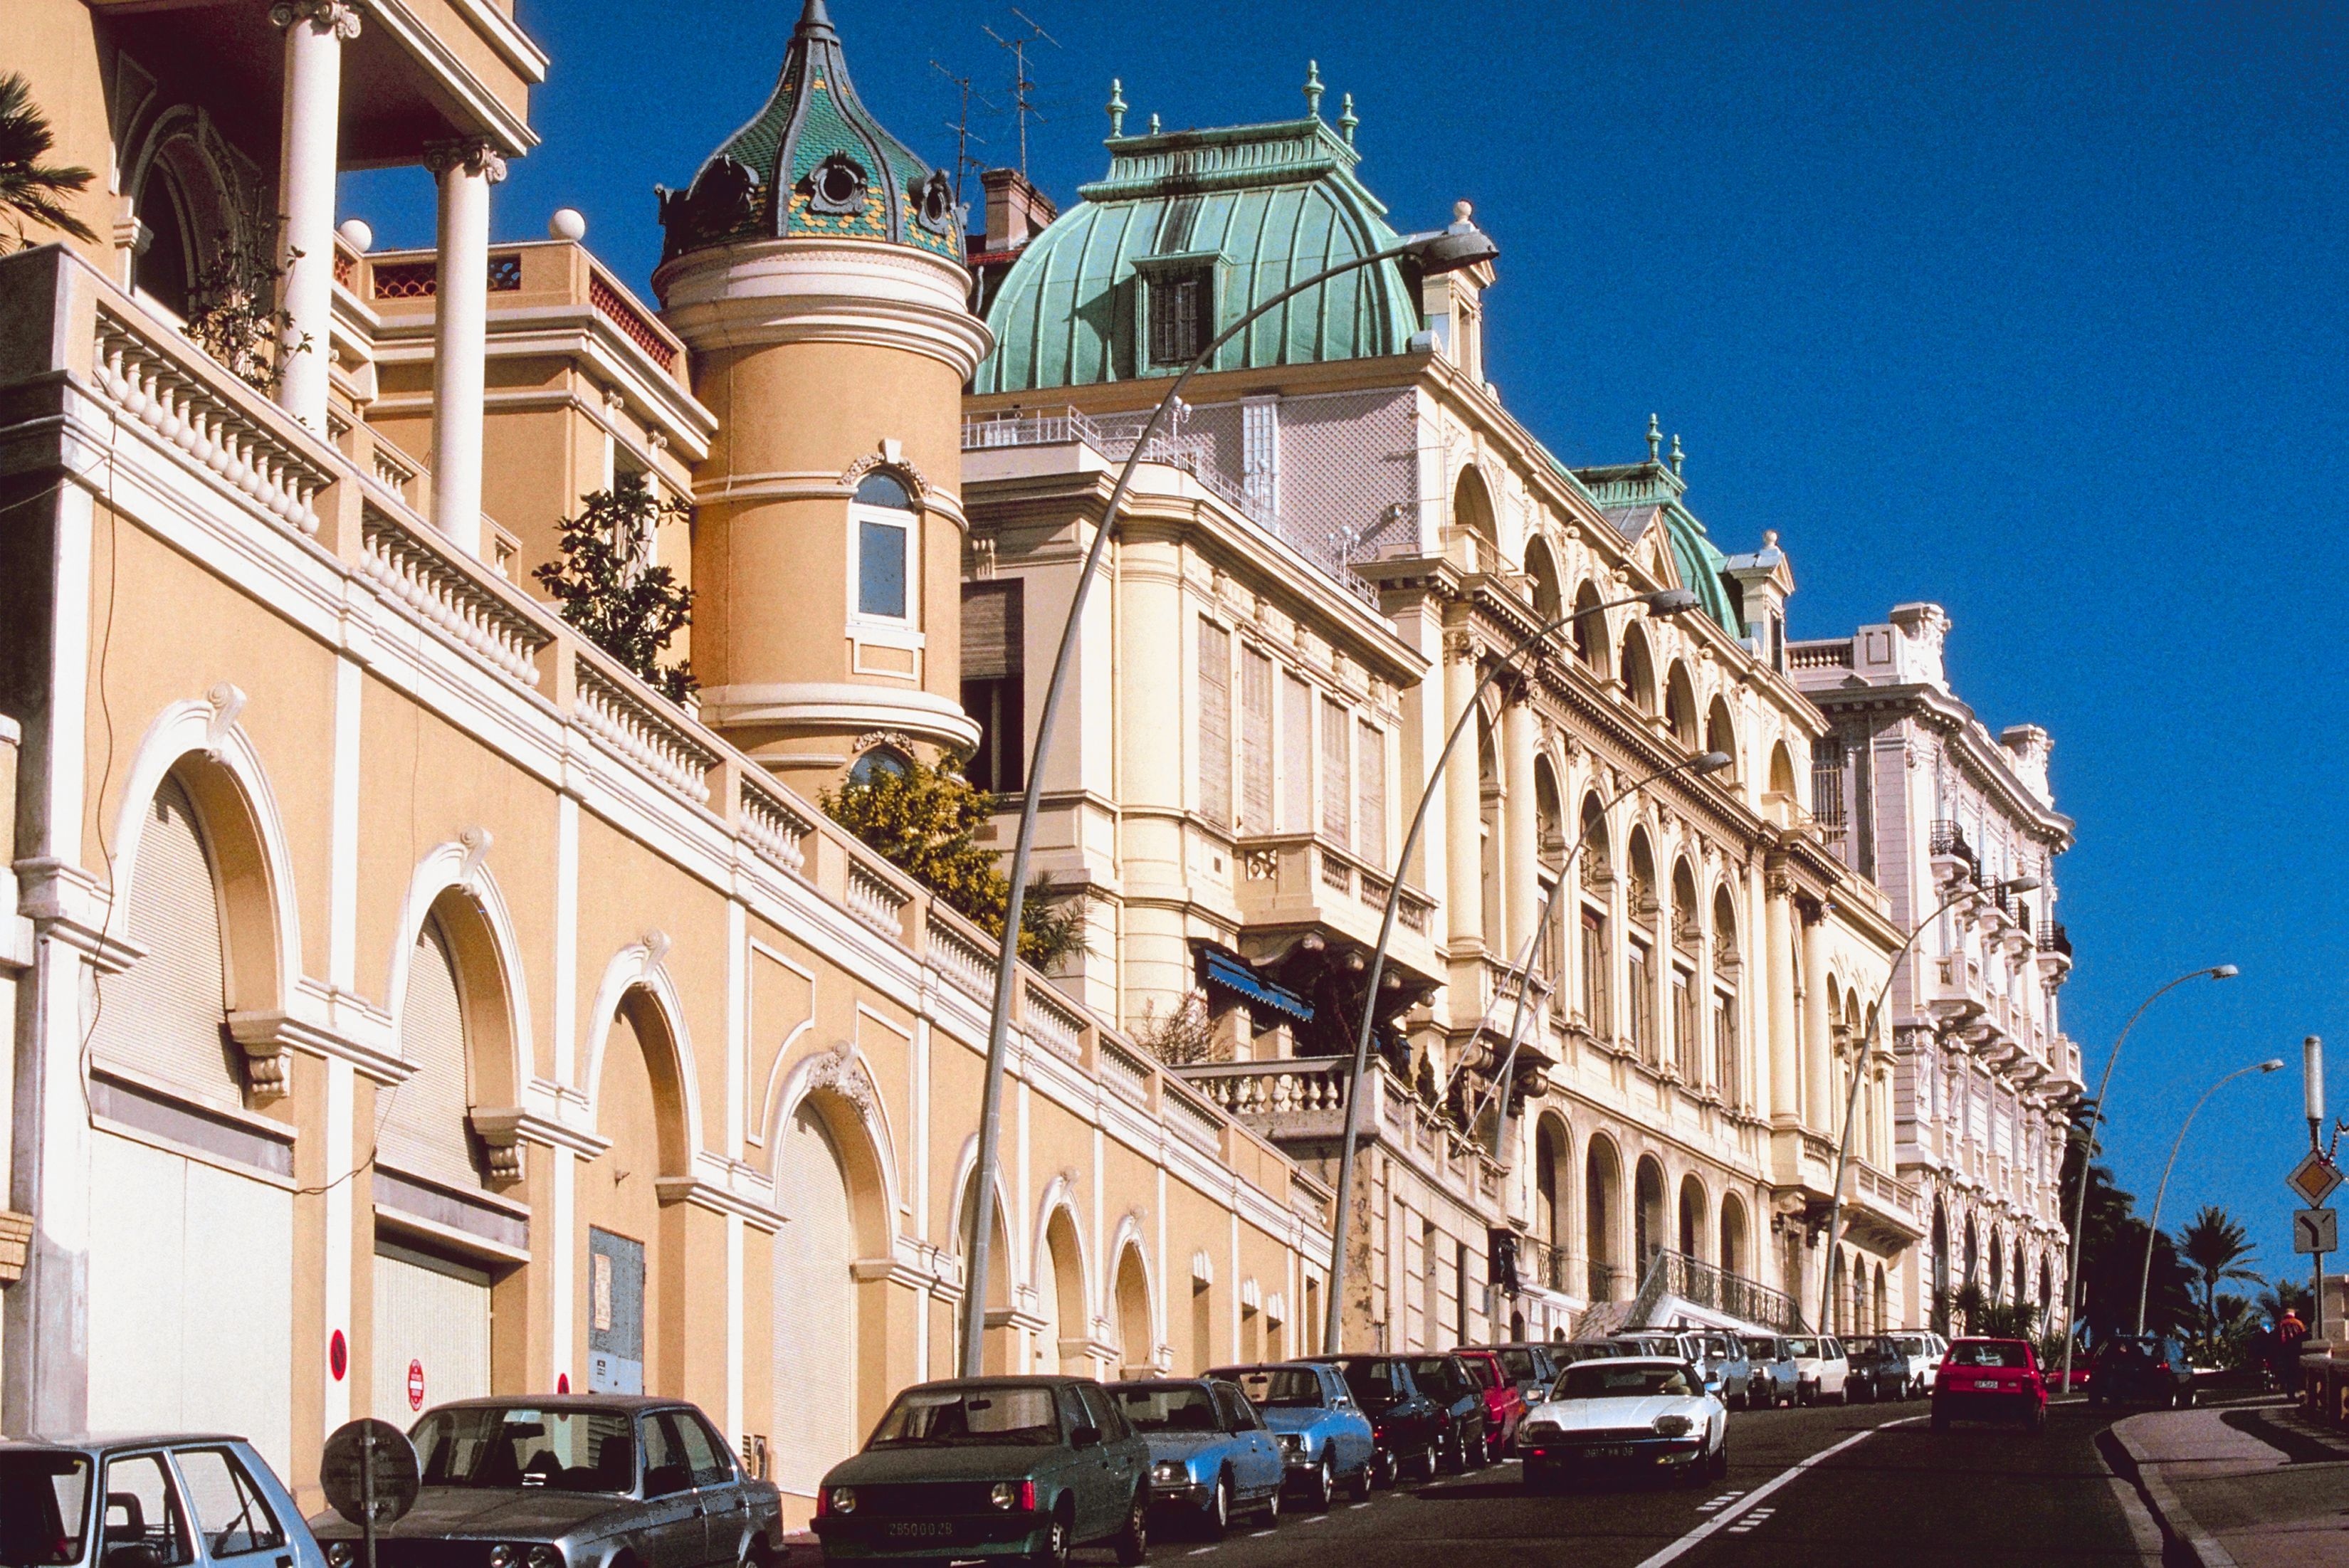 Monaco's historical buildings